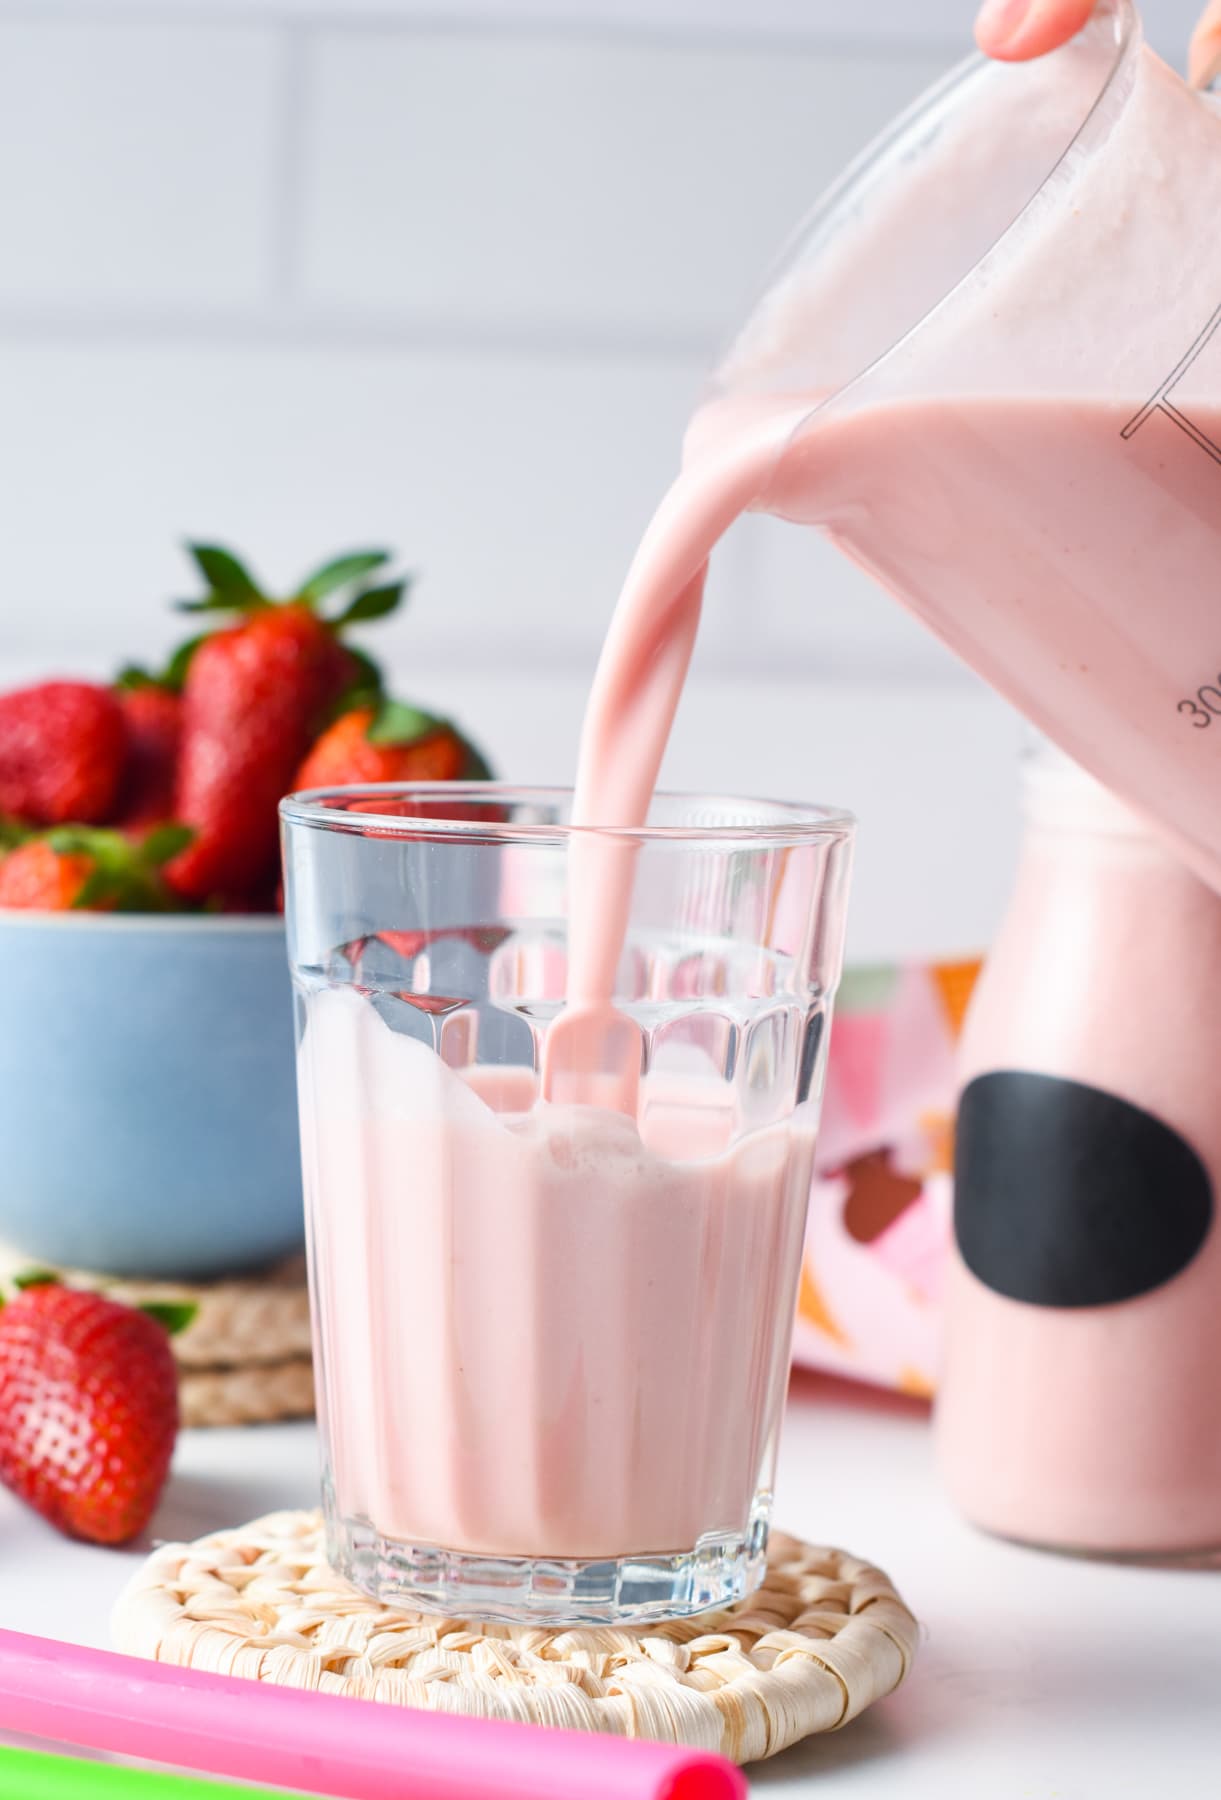 How to make Strawberry Milk